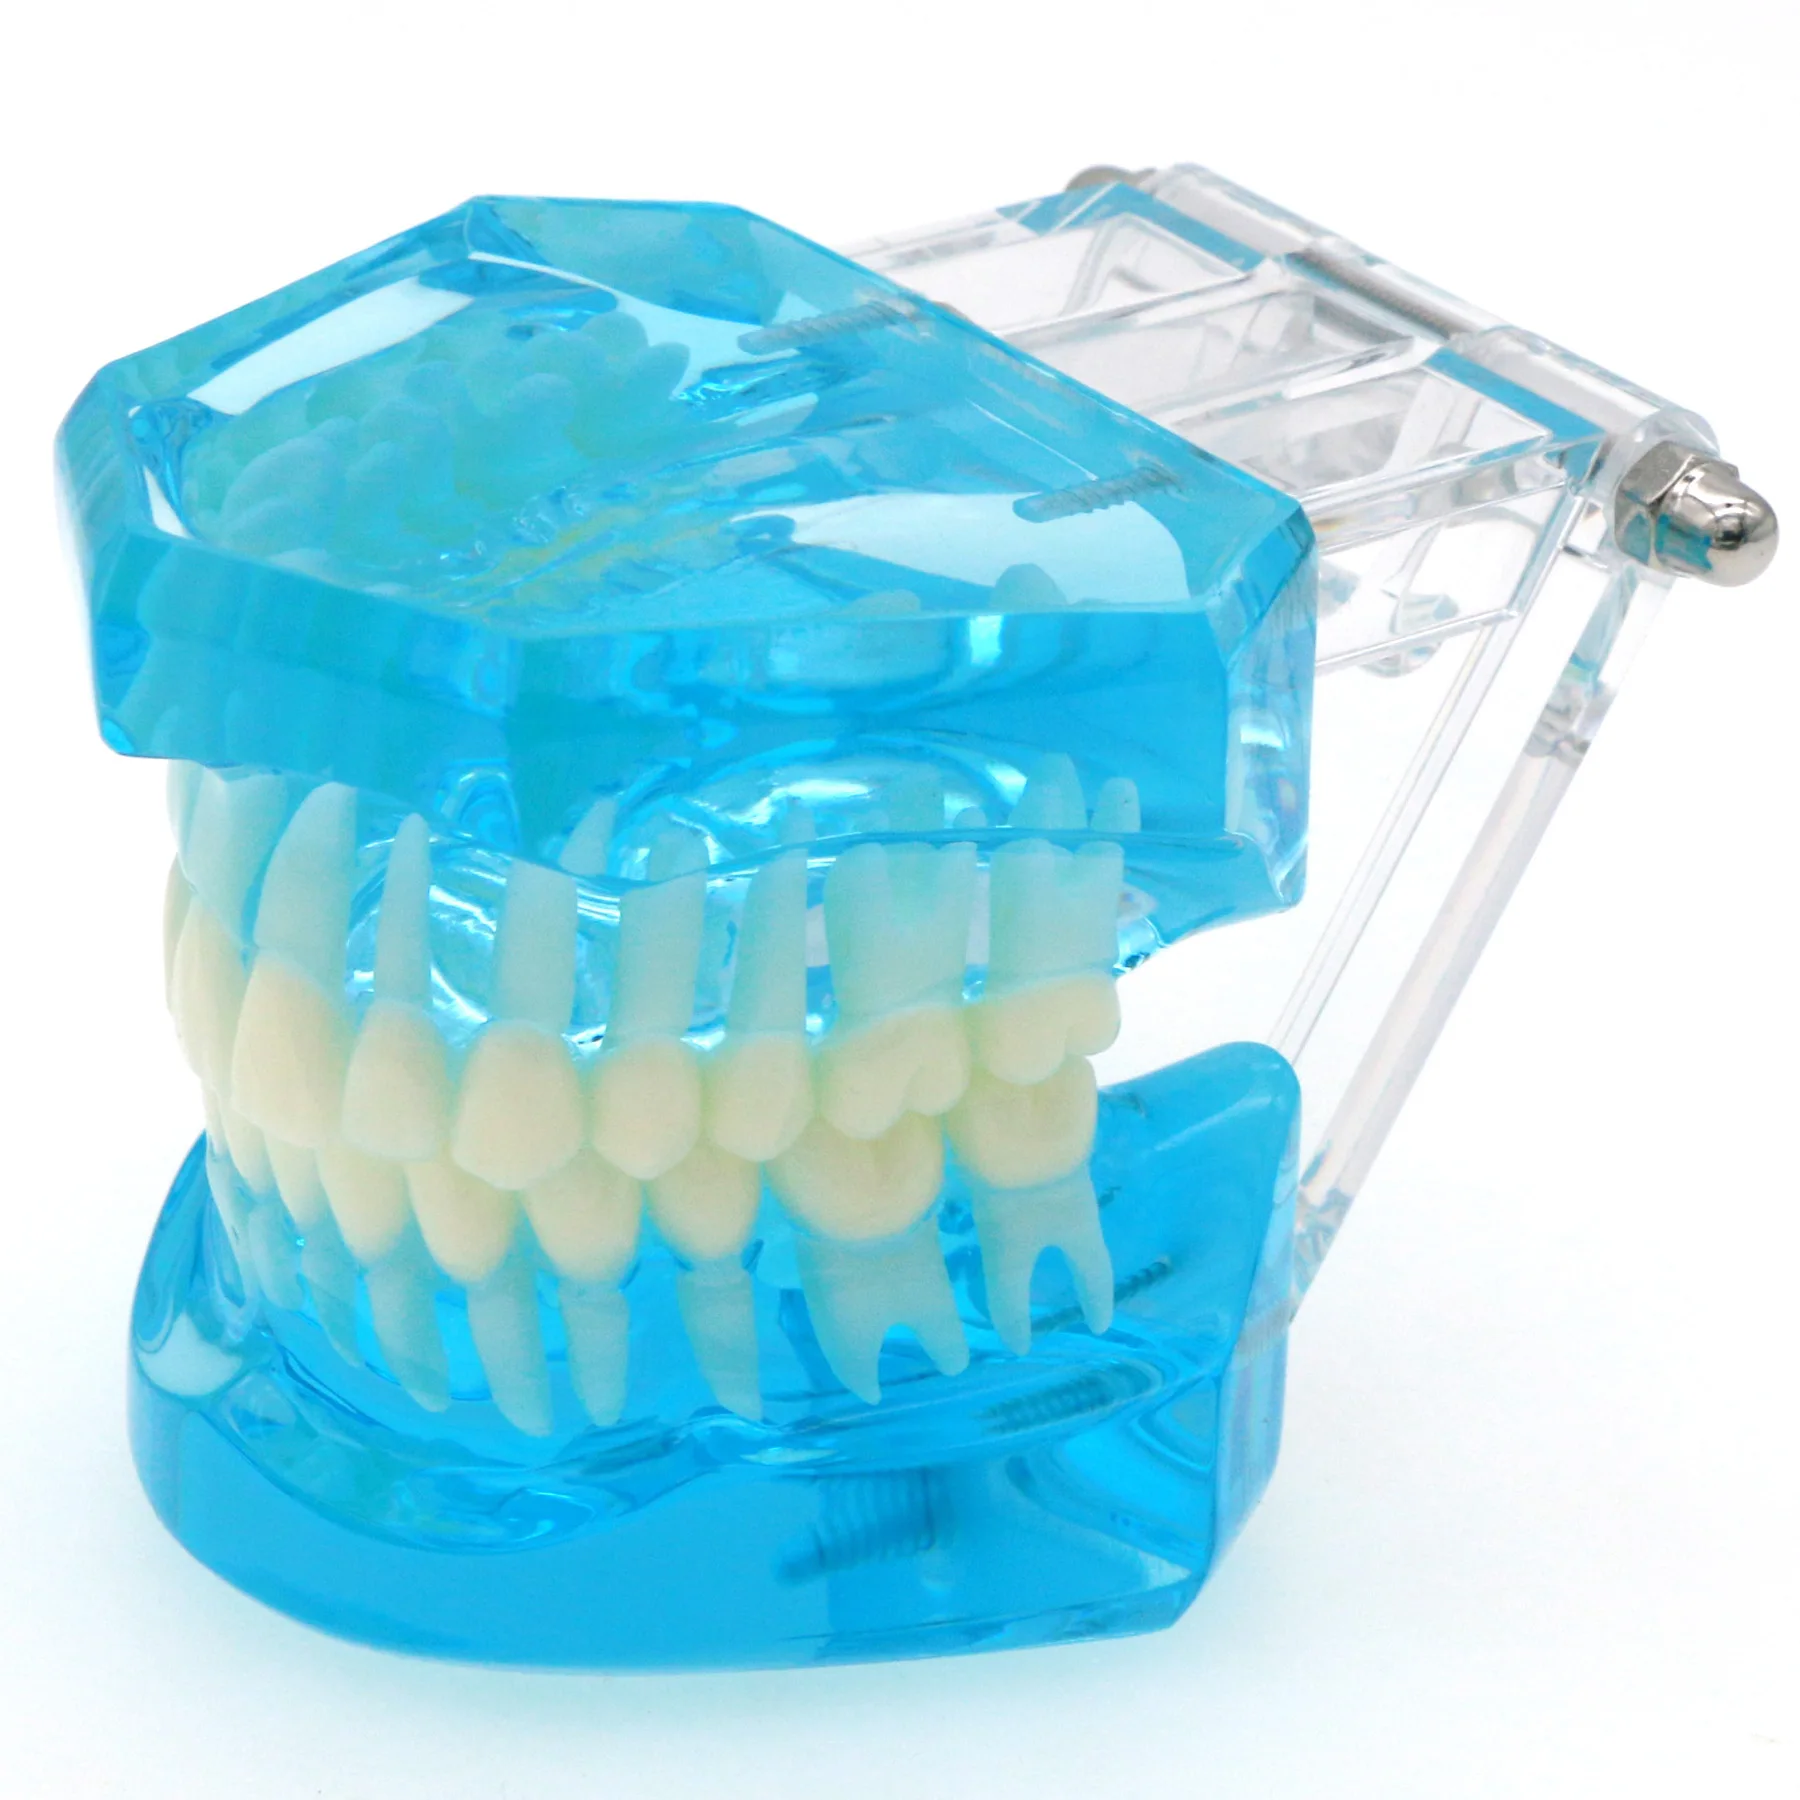 

Dental Teeth Model Typodont 1:1 Adult Standard for Teaching Practice M7001